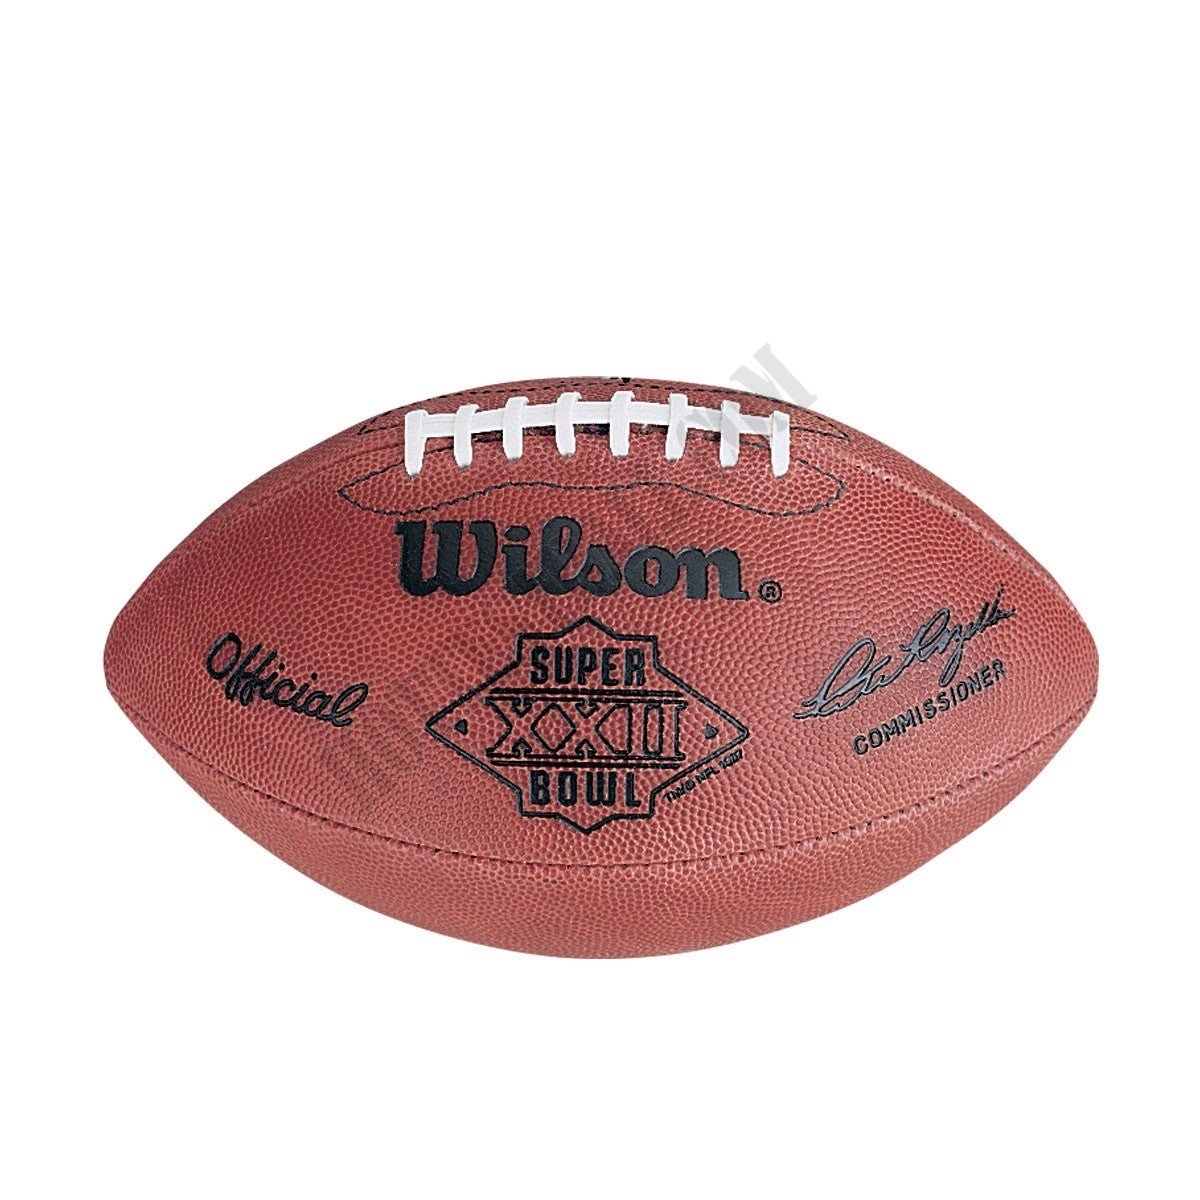 Super Bowl XXII Game Football - Washington ● Wilson Promotions - Super Bowl XXII Game Football - Washington ● Wilson Promotions